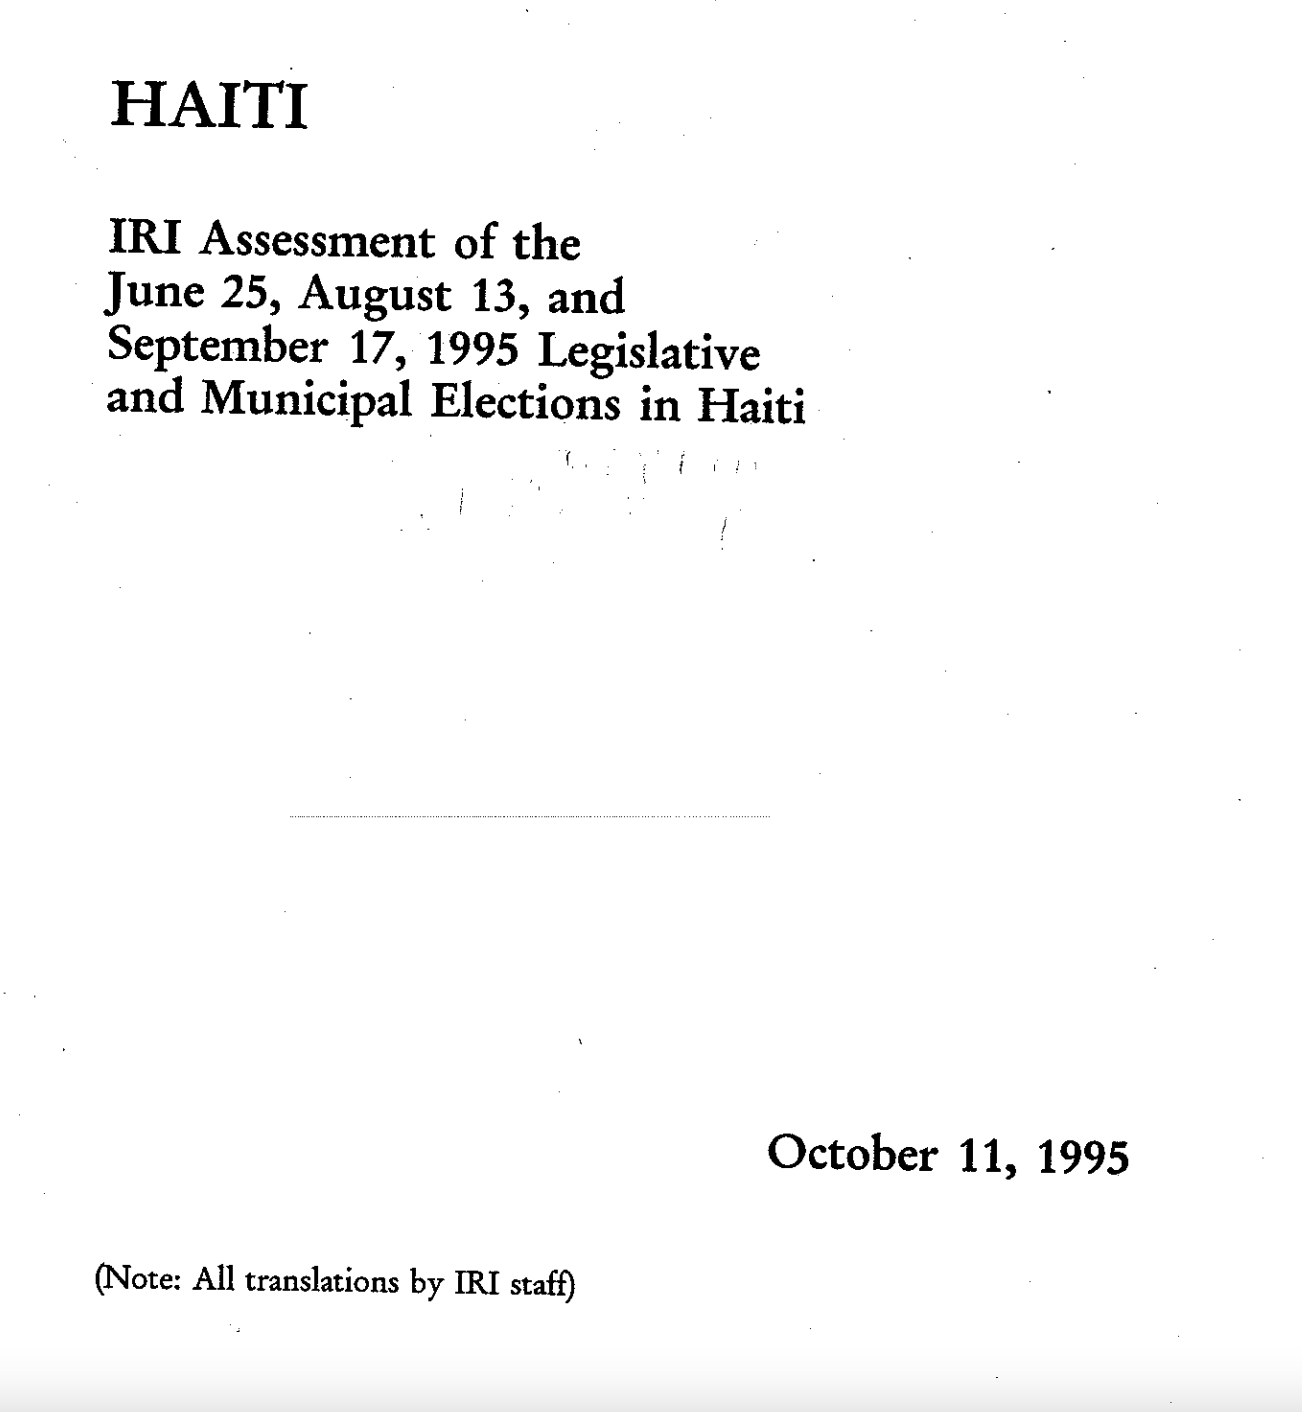 Haiti: IRI Assessment of the June 25, Aug 13, and Sept 17 1995 Legislative and Municipal Elections in Haiti